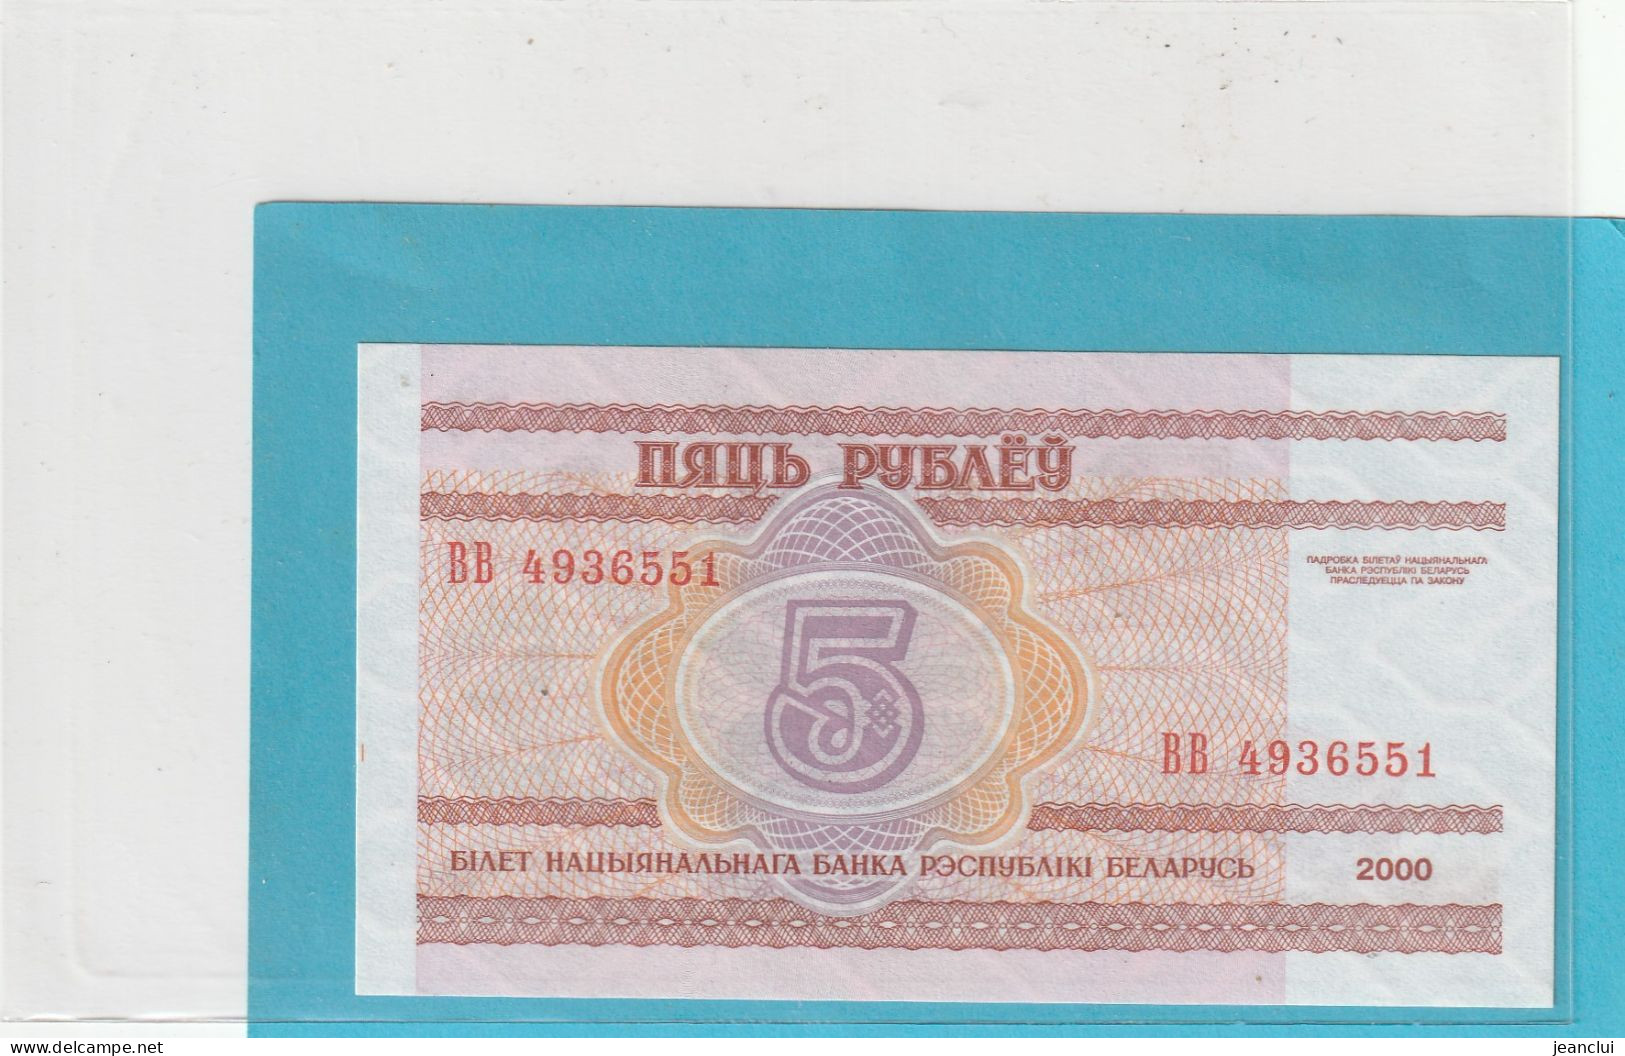 BELARUS NATIONAL BANK  .  5 RUBLEI   . N°  BB 4936551 .  2000     2 SCANNES  .  BILLET ETAT LUXE - Wit-Rusland